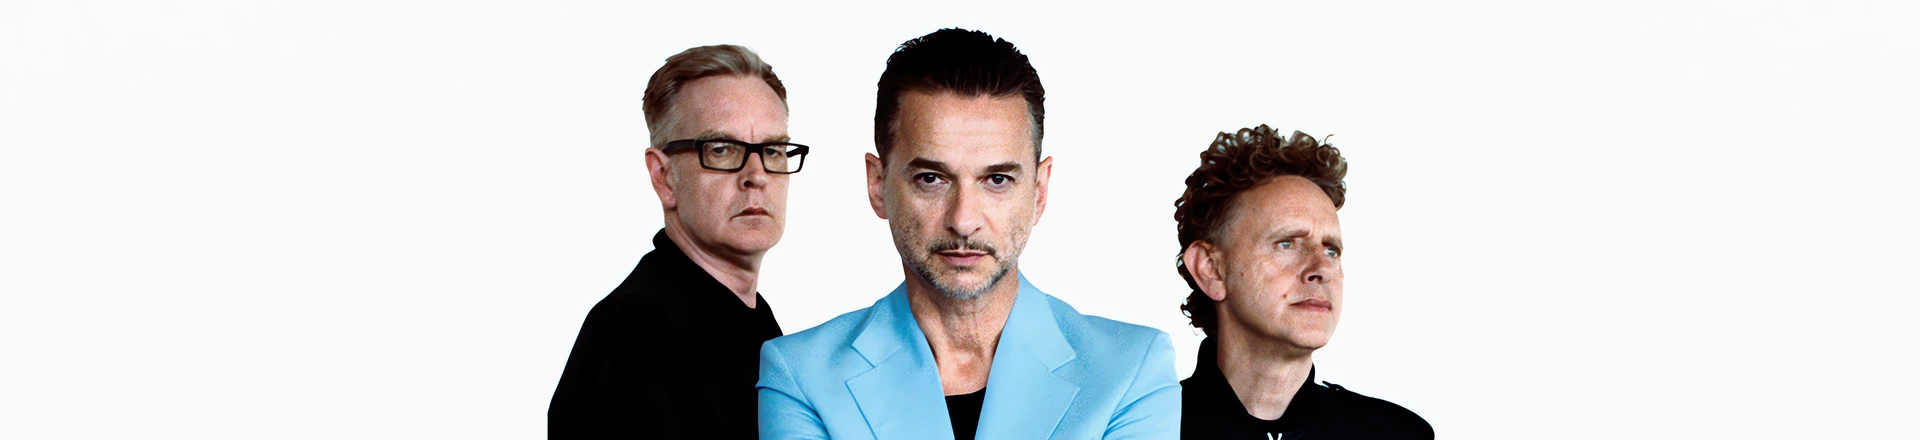 RELACJA: Depeche Mode w Warszawie